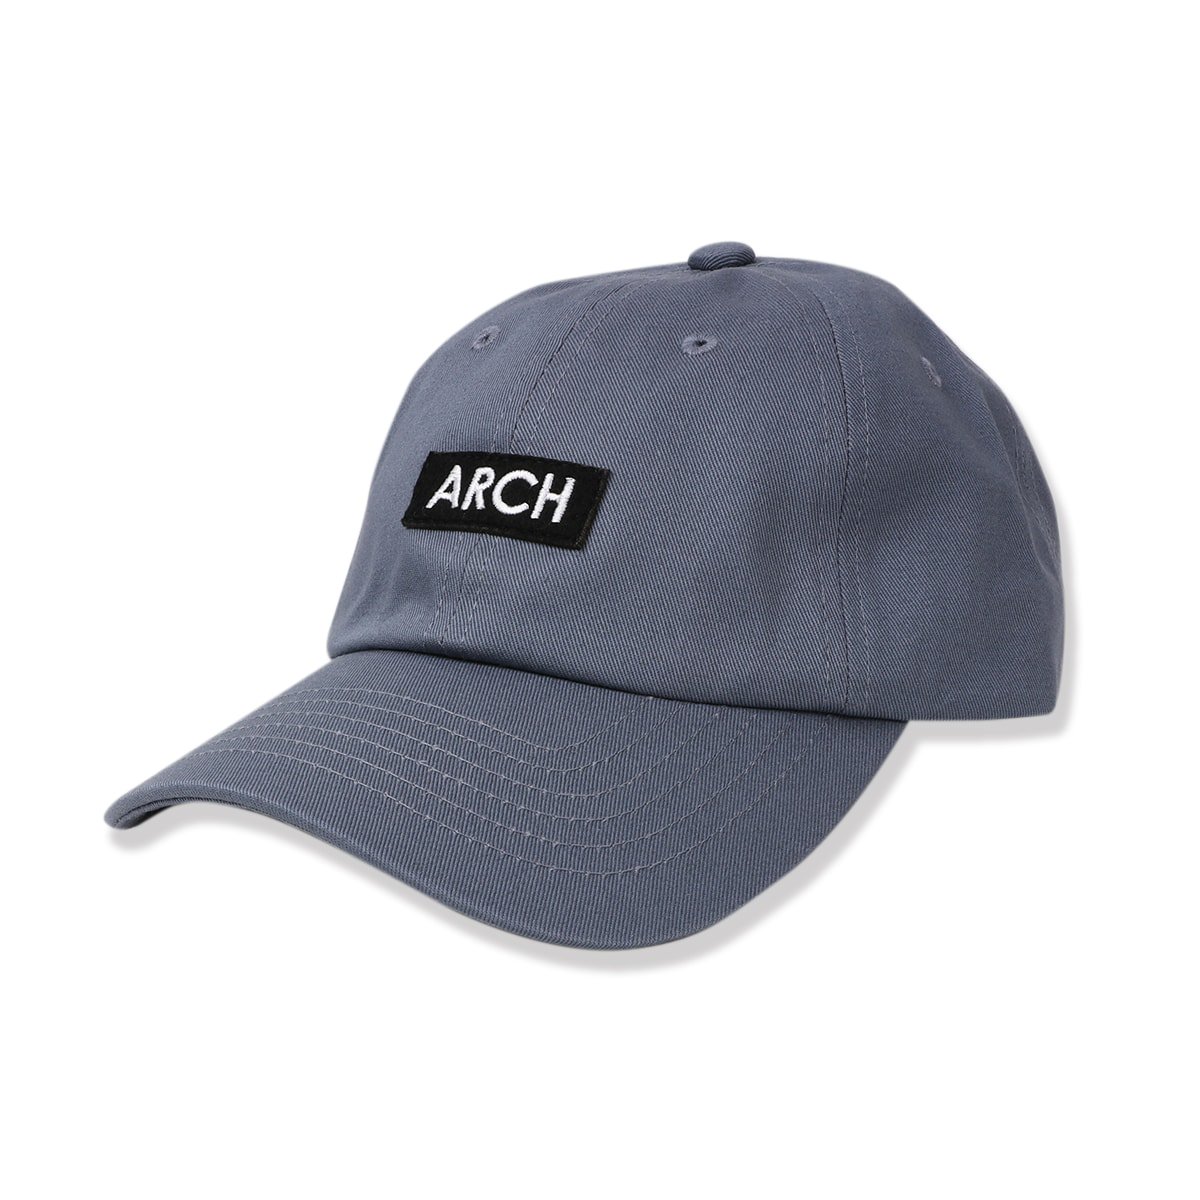 patch twill cap【stone blue】